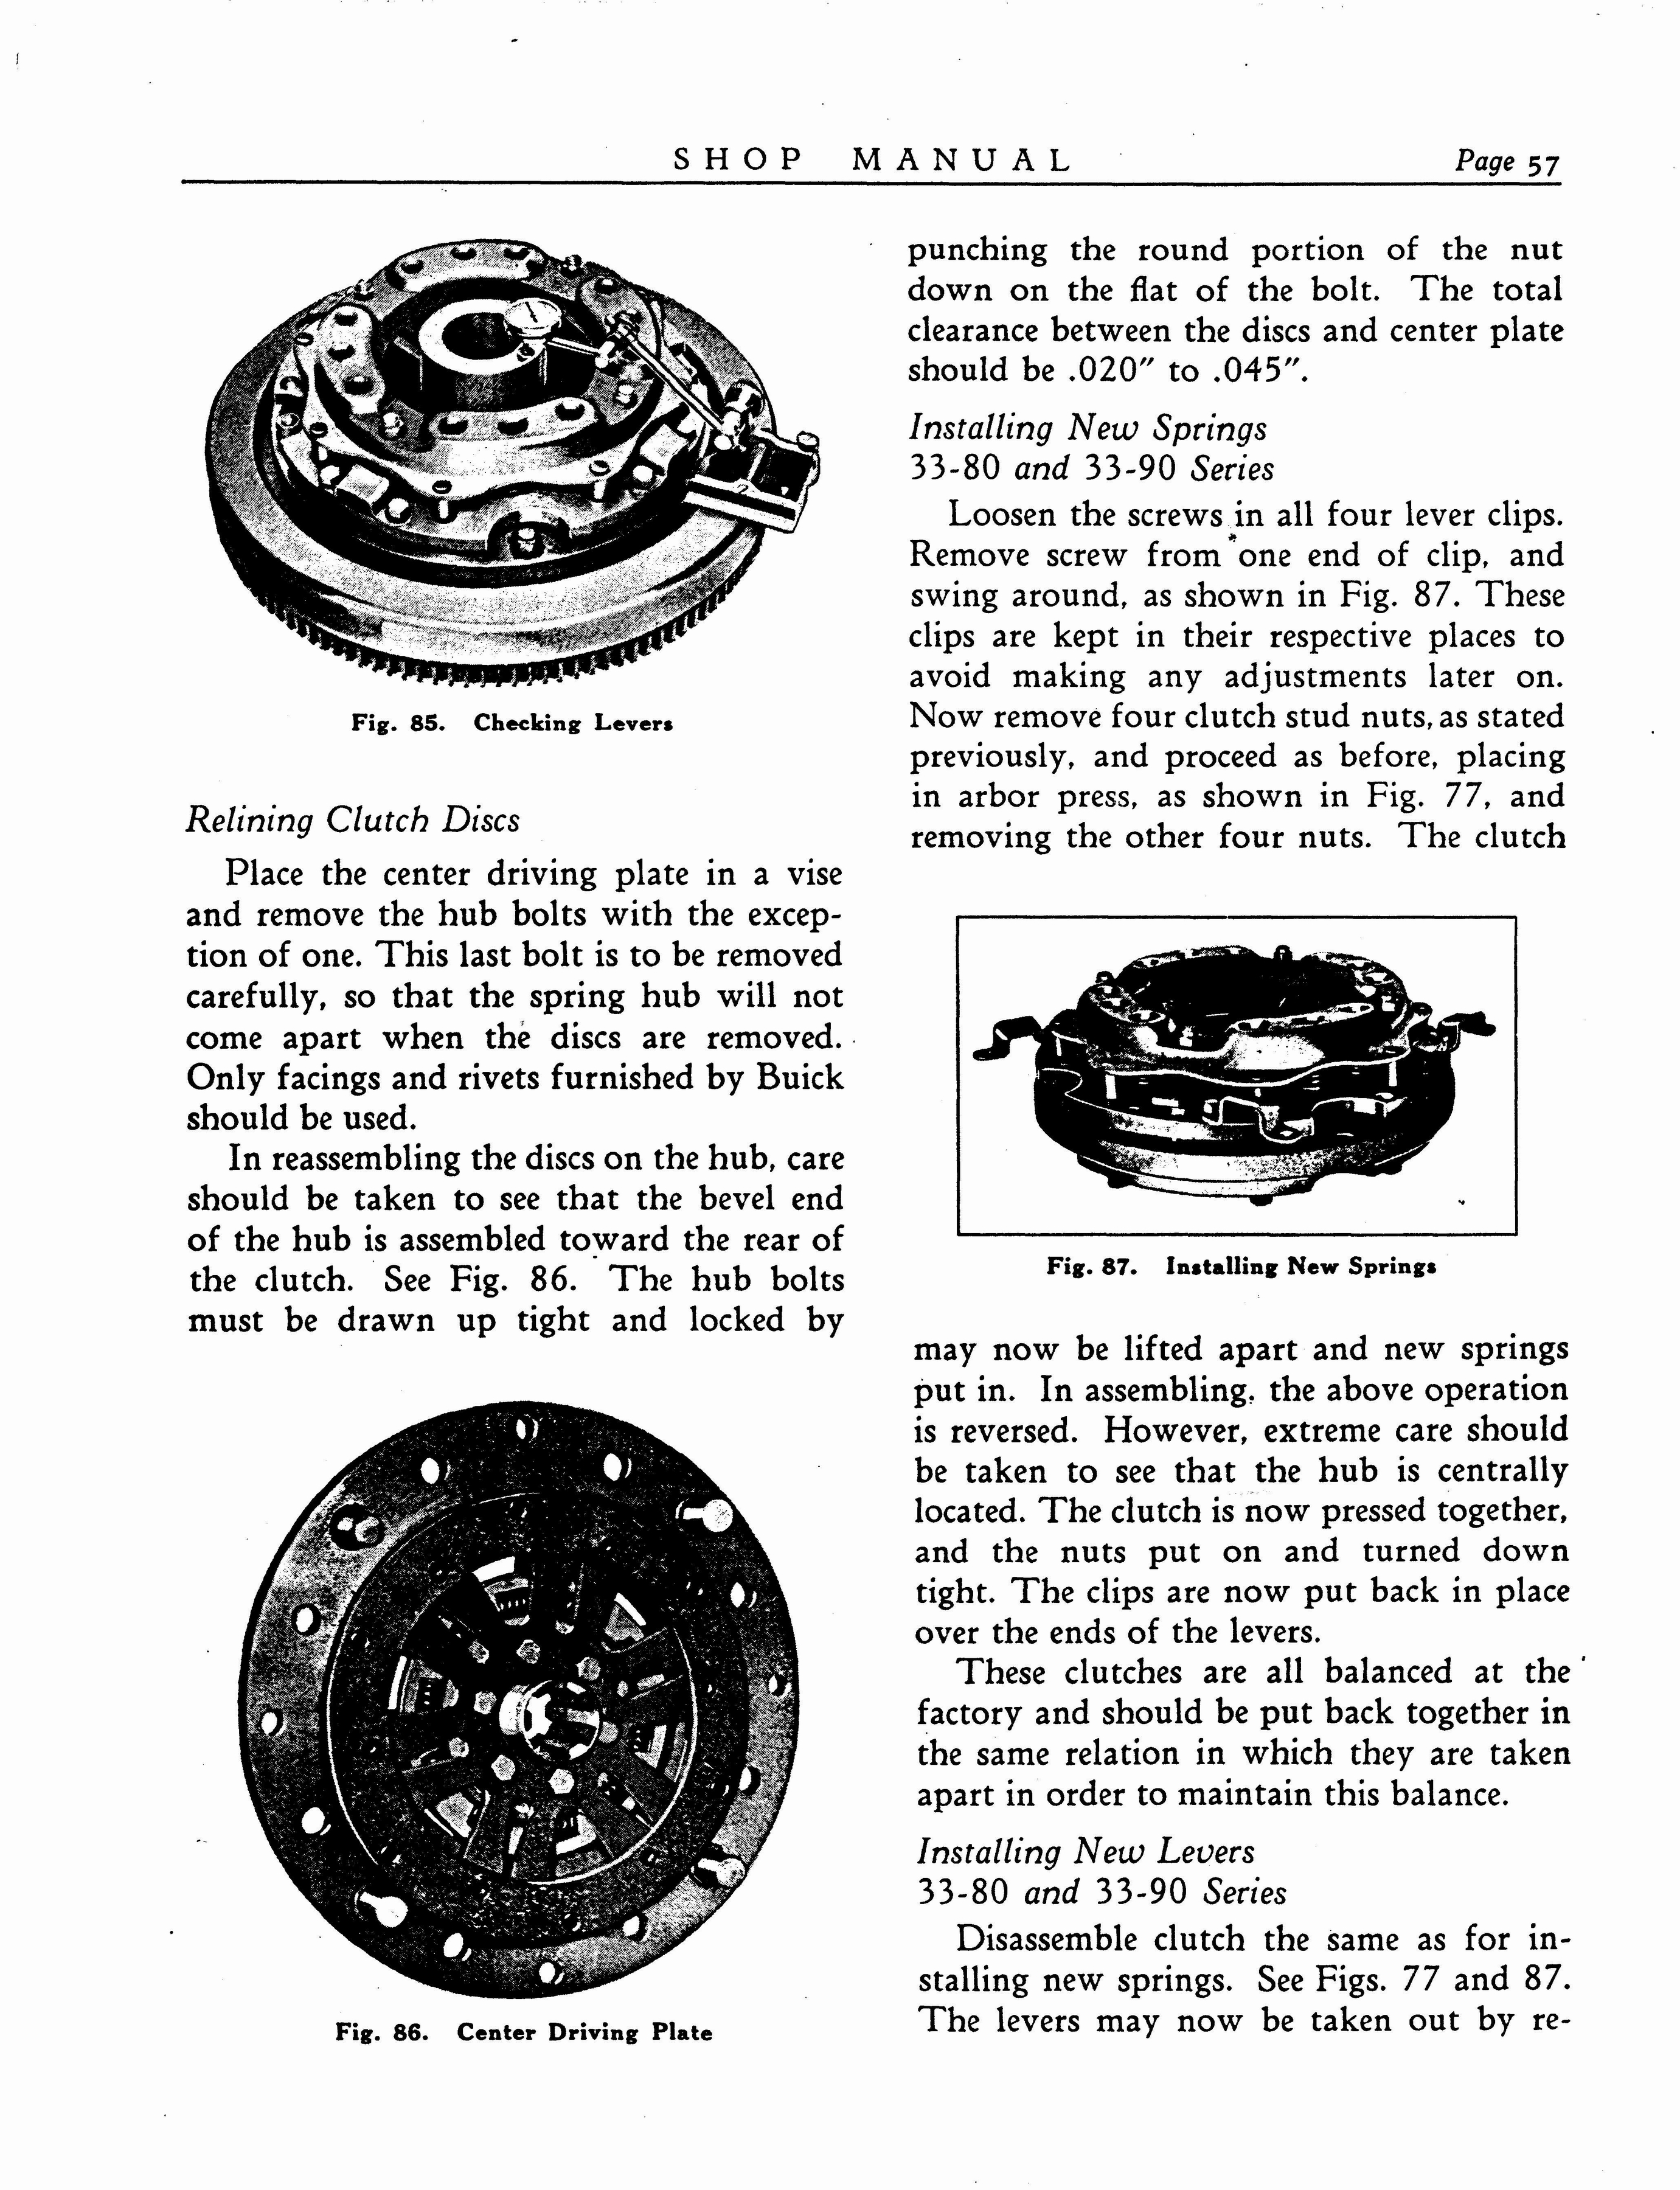 n_1933 Buick Shop Manual_Page_058.jpg